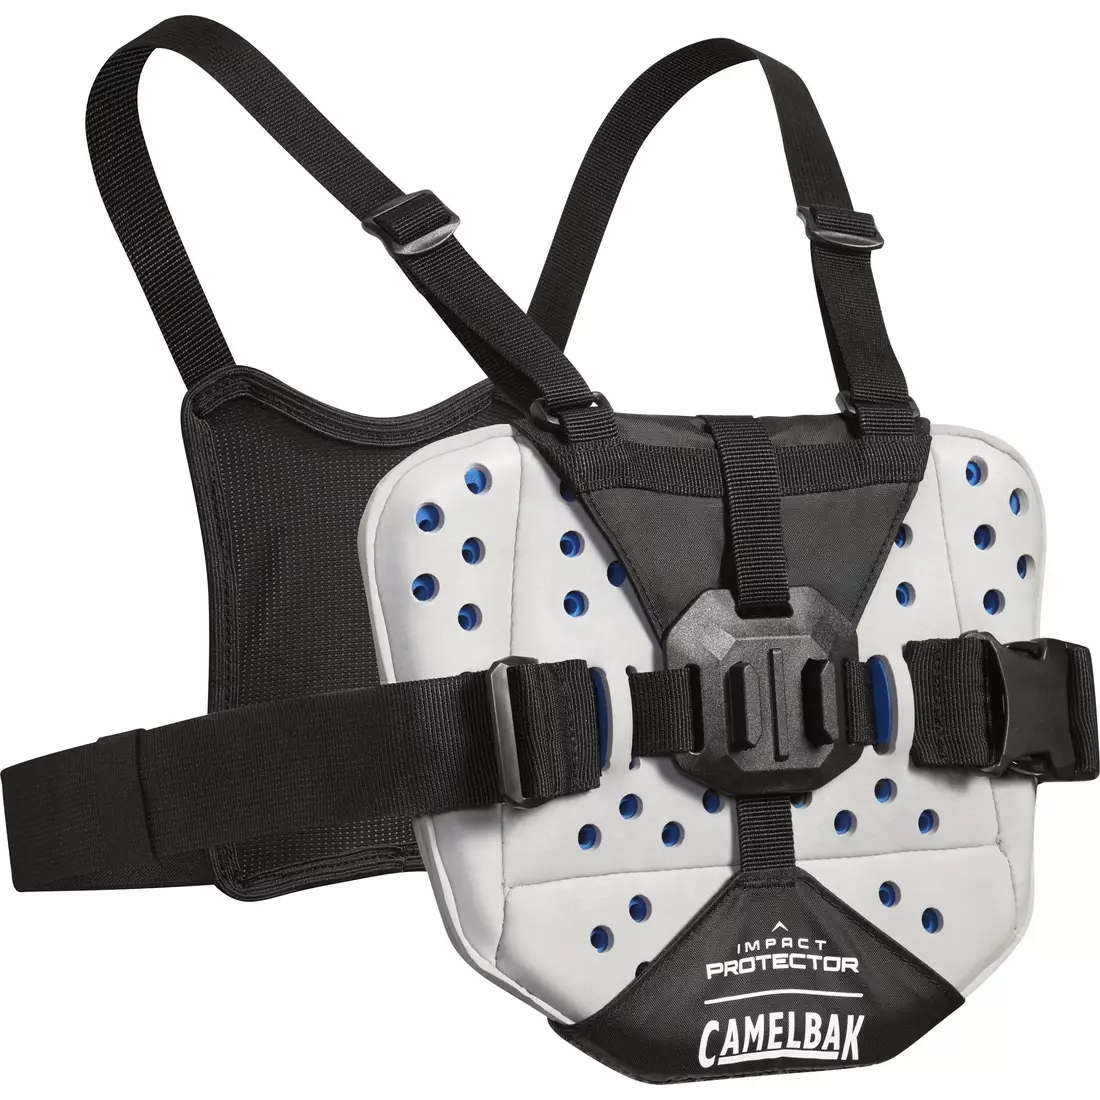 Camelbak SS18 Chránič chest protector with holder for sports camera STERNUM PROTECTOR Black 1557001000